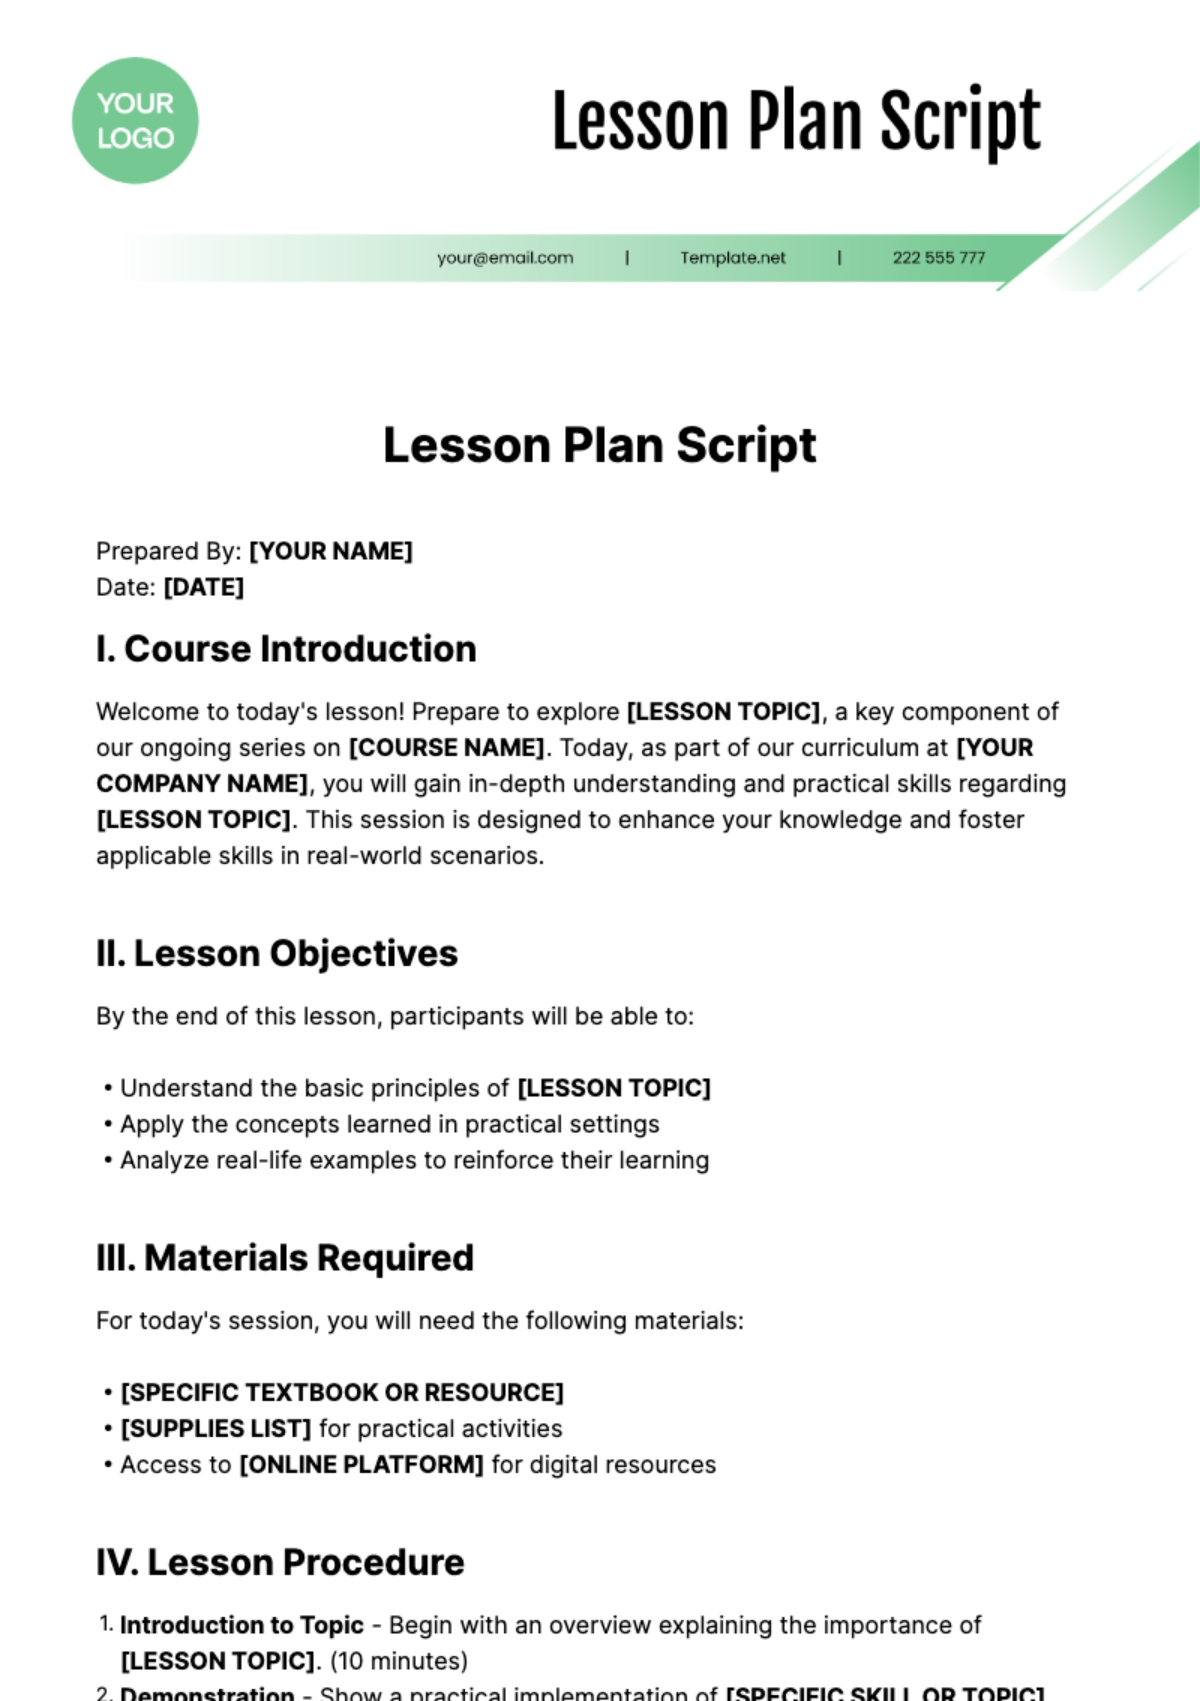 Lesson Plan Script Template